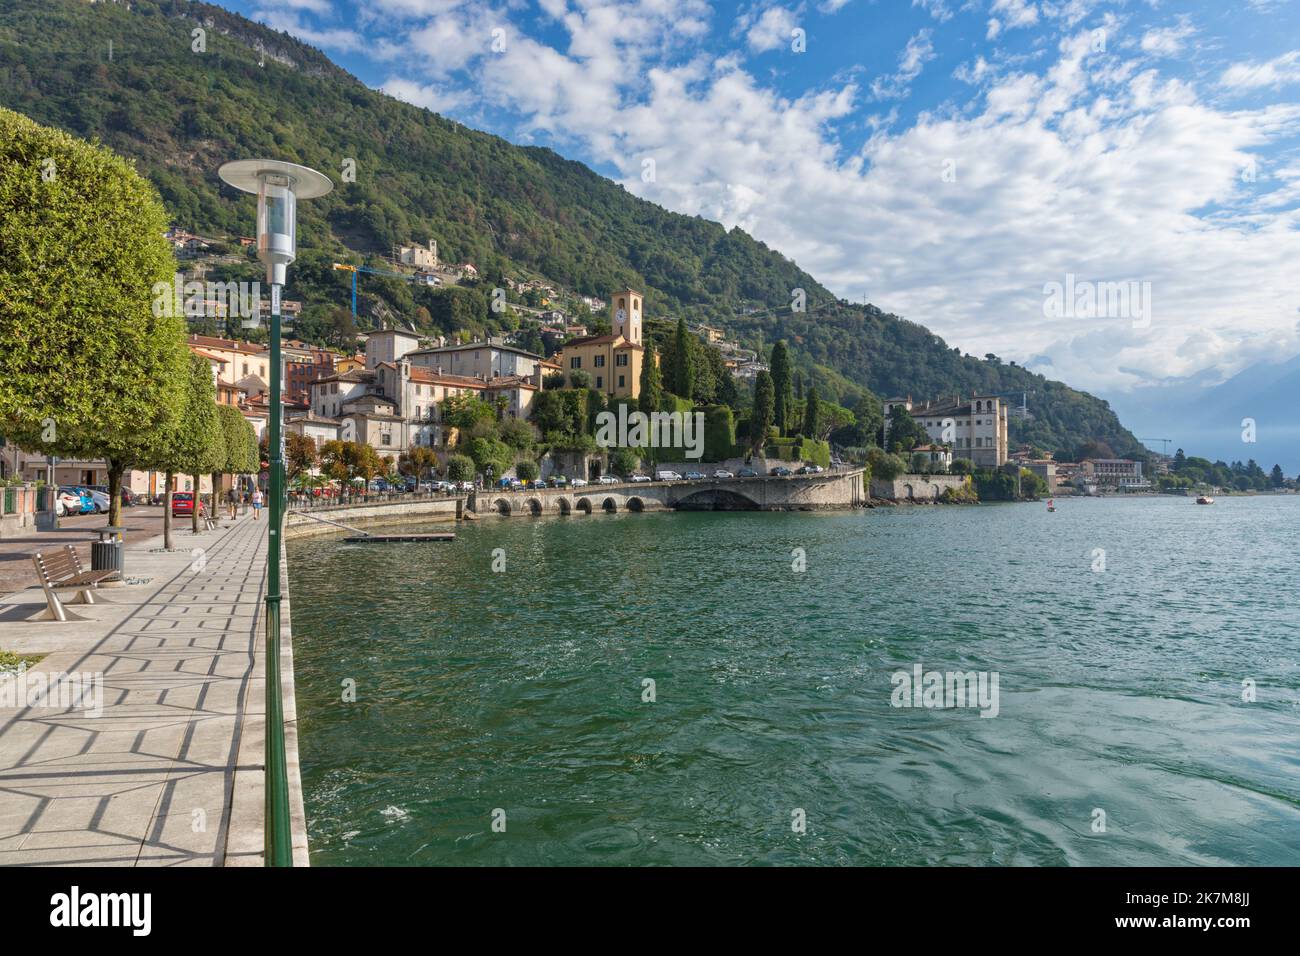 Town of Gravedona ed Uniti on Lake Como with boardwalk and Palazo Gallio Stock Photo